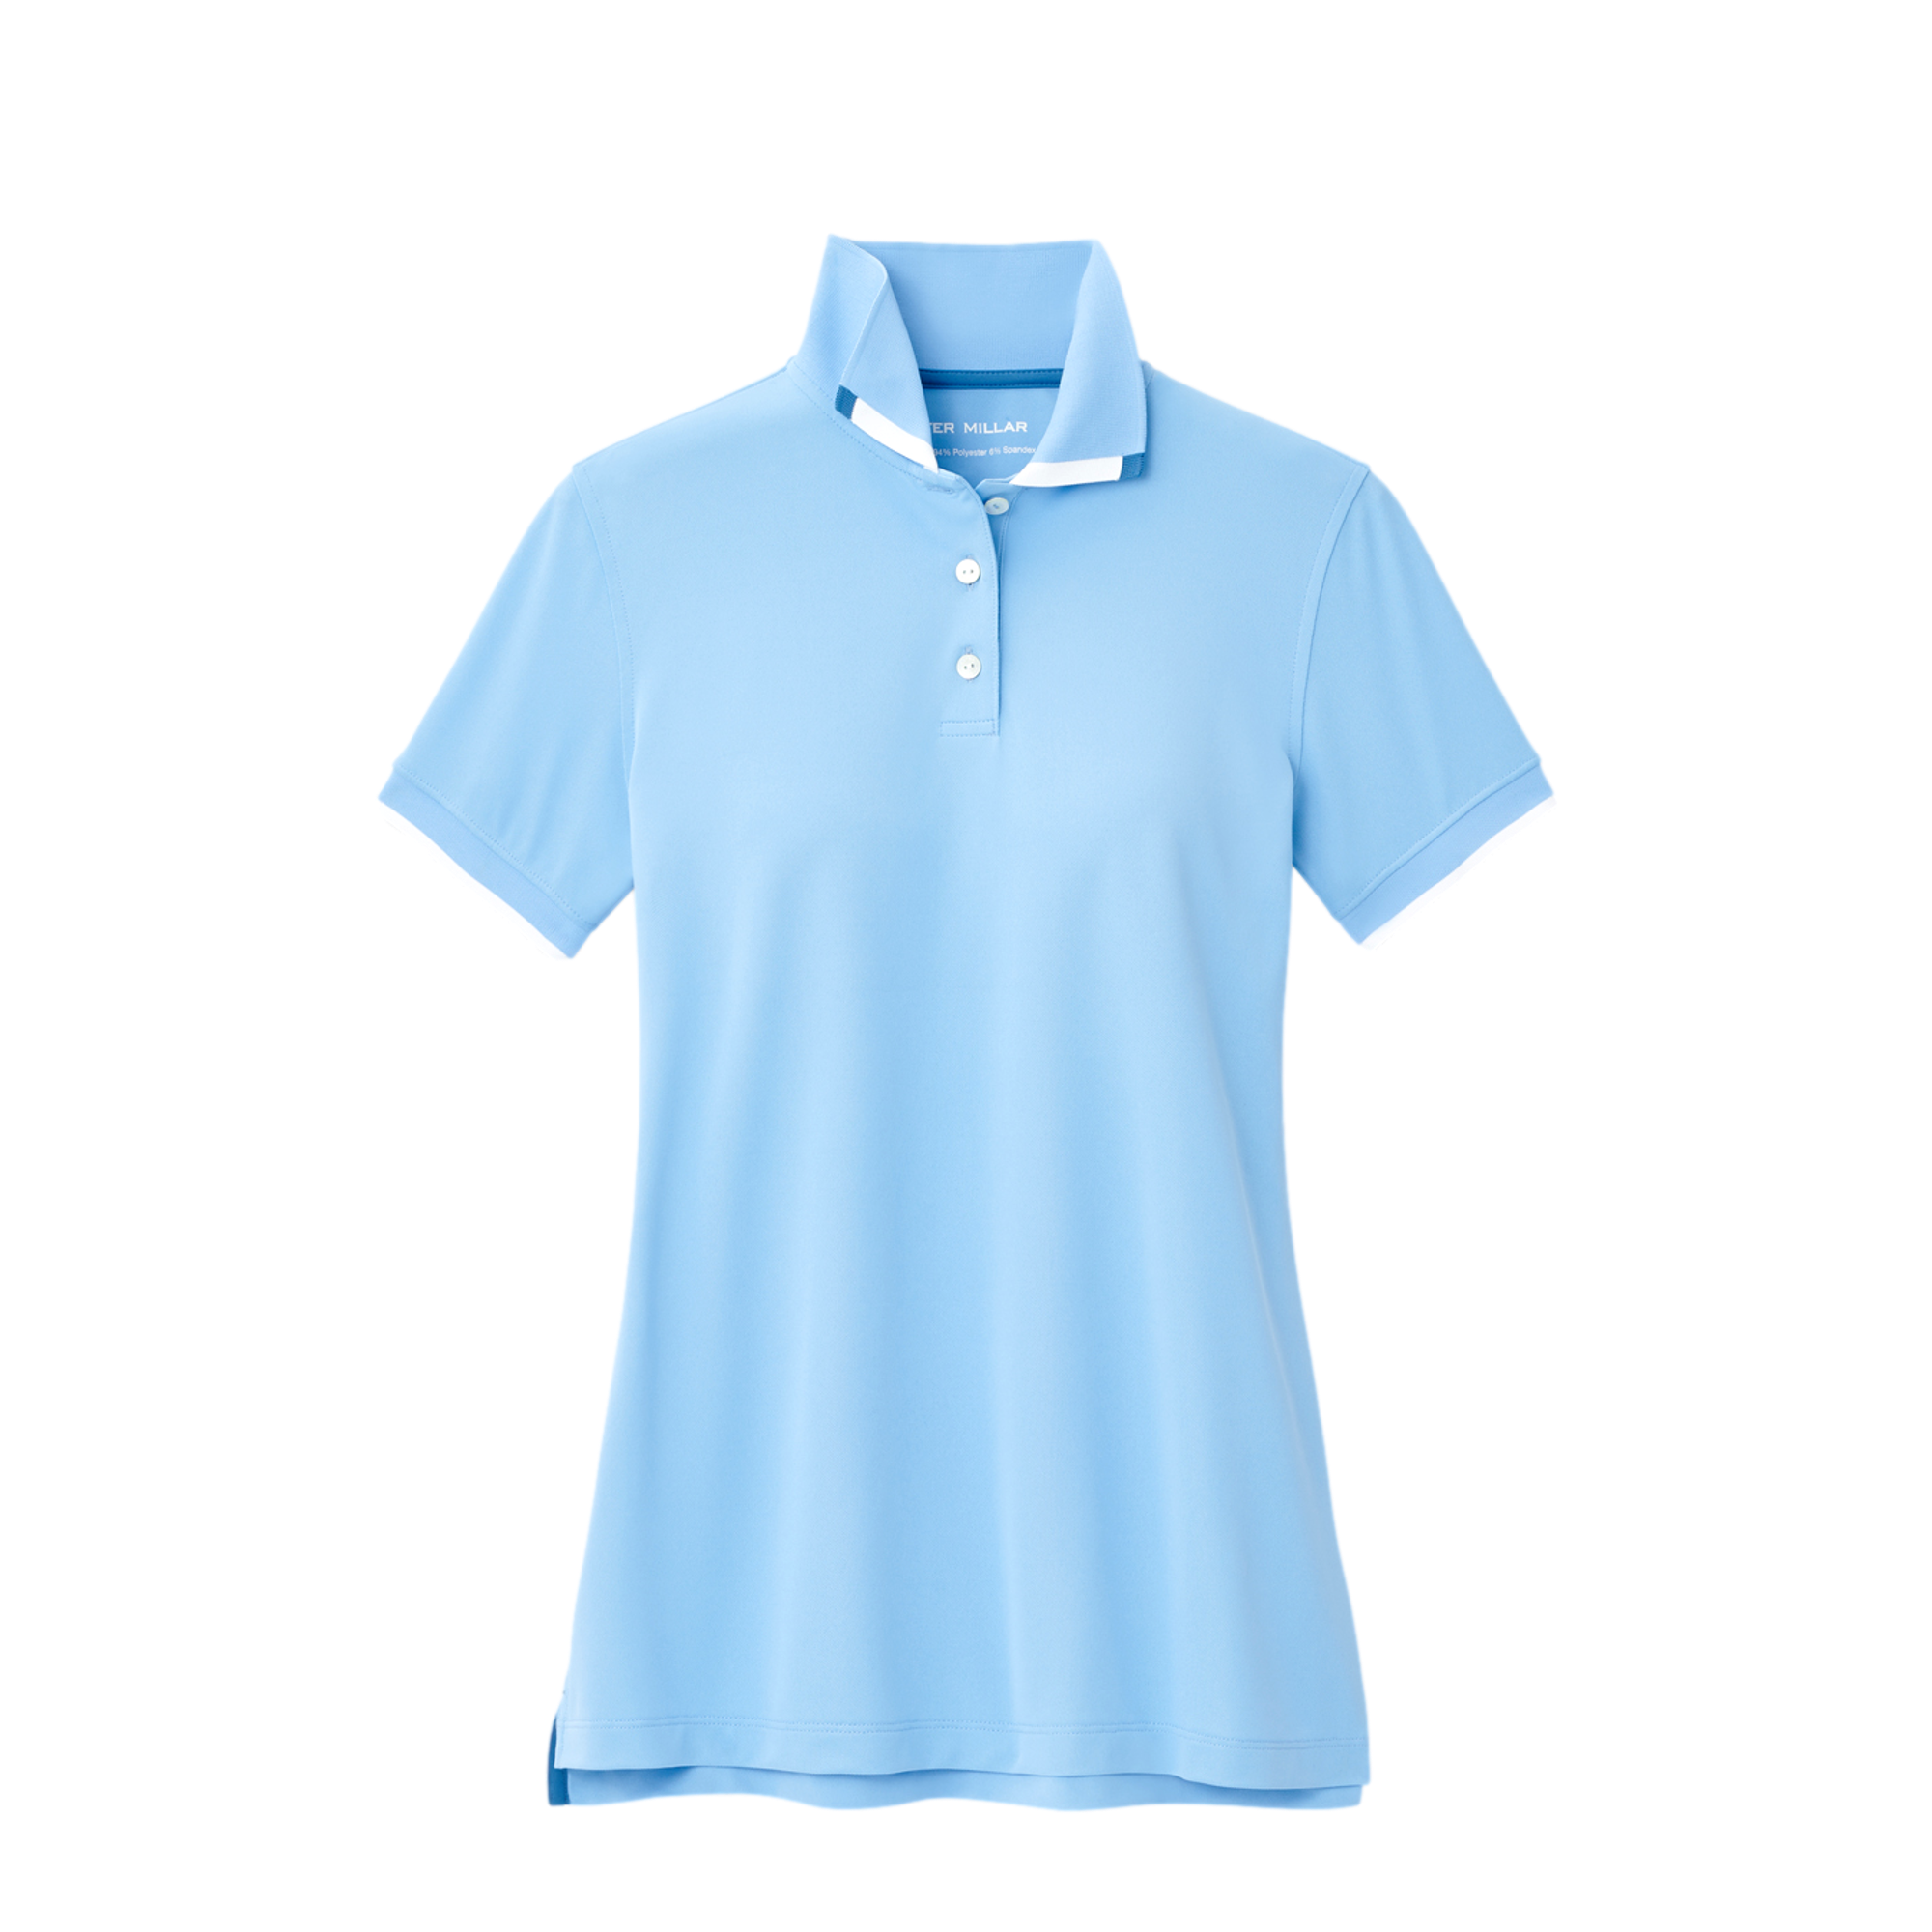 Whitworth Sport Mesh Short Sleeve Polo Shirt